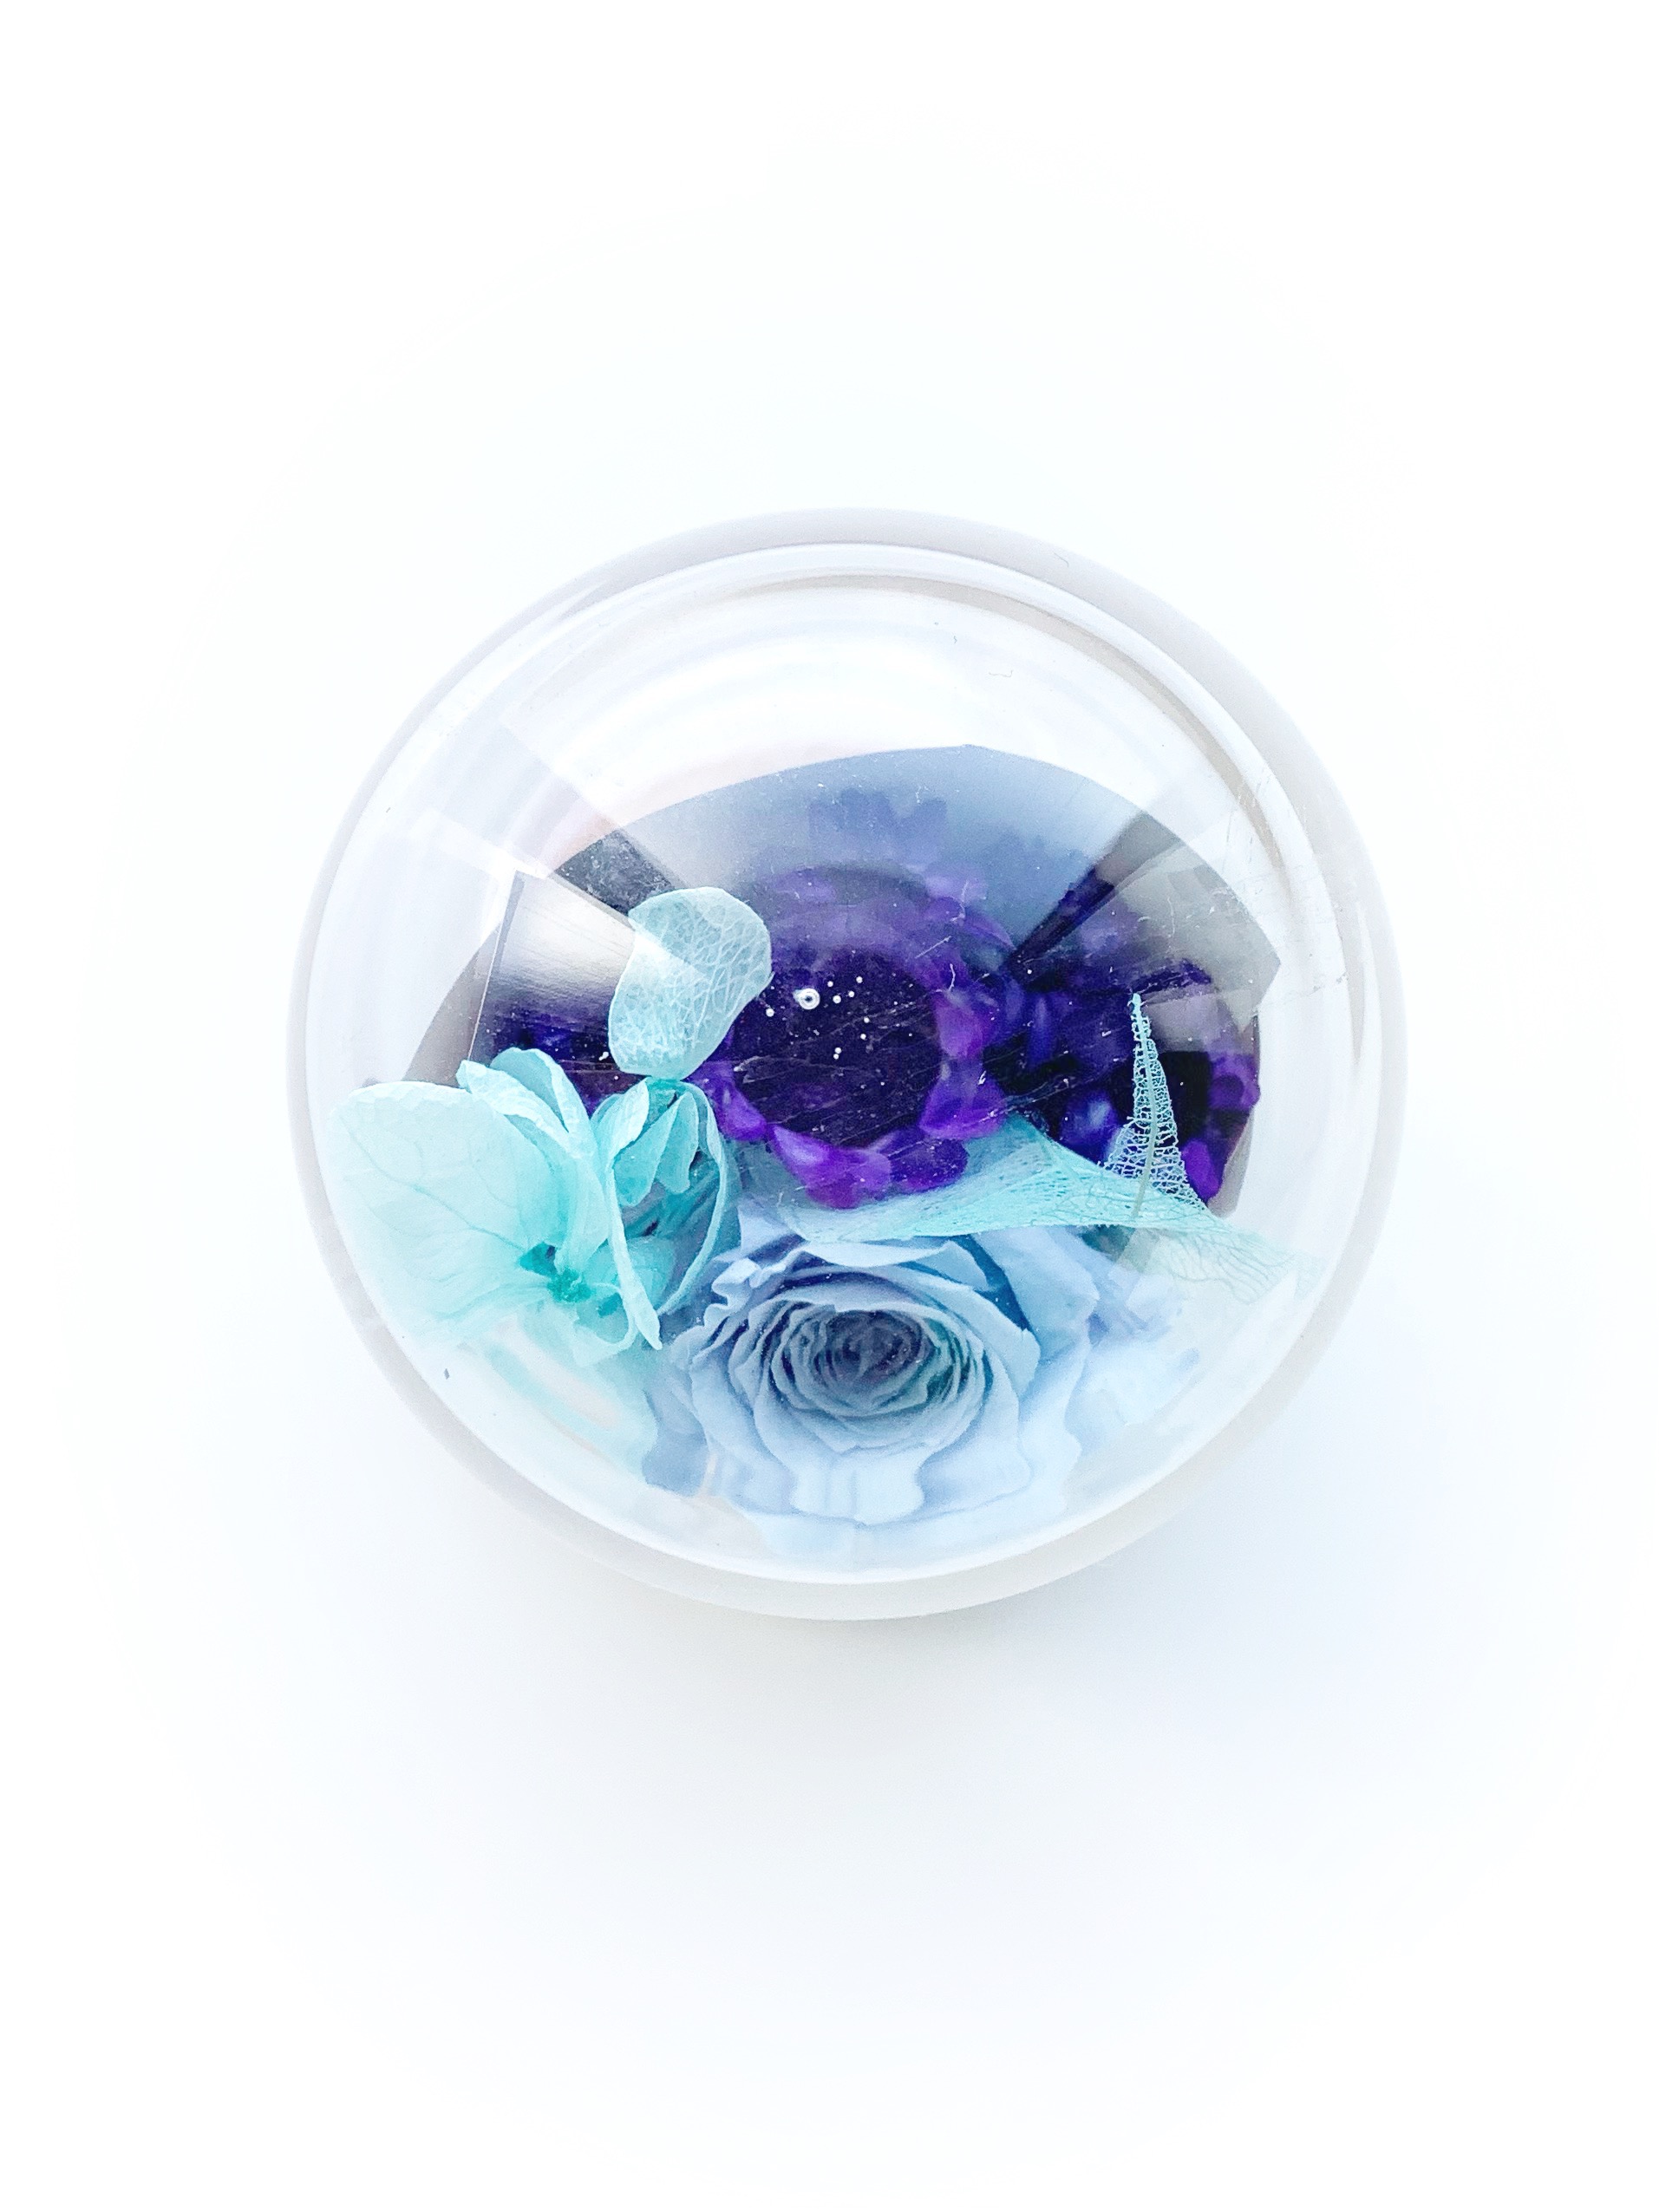 【CHIEMI NAGASHIMA】glass dome  【blue】